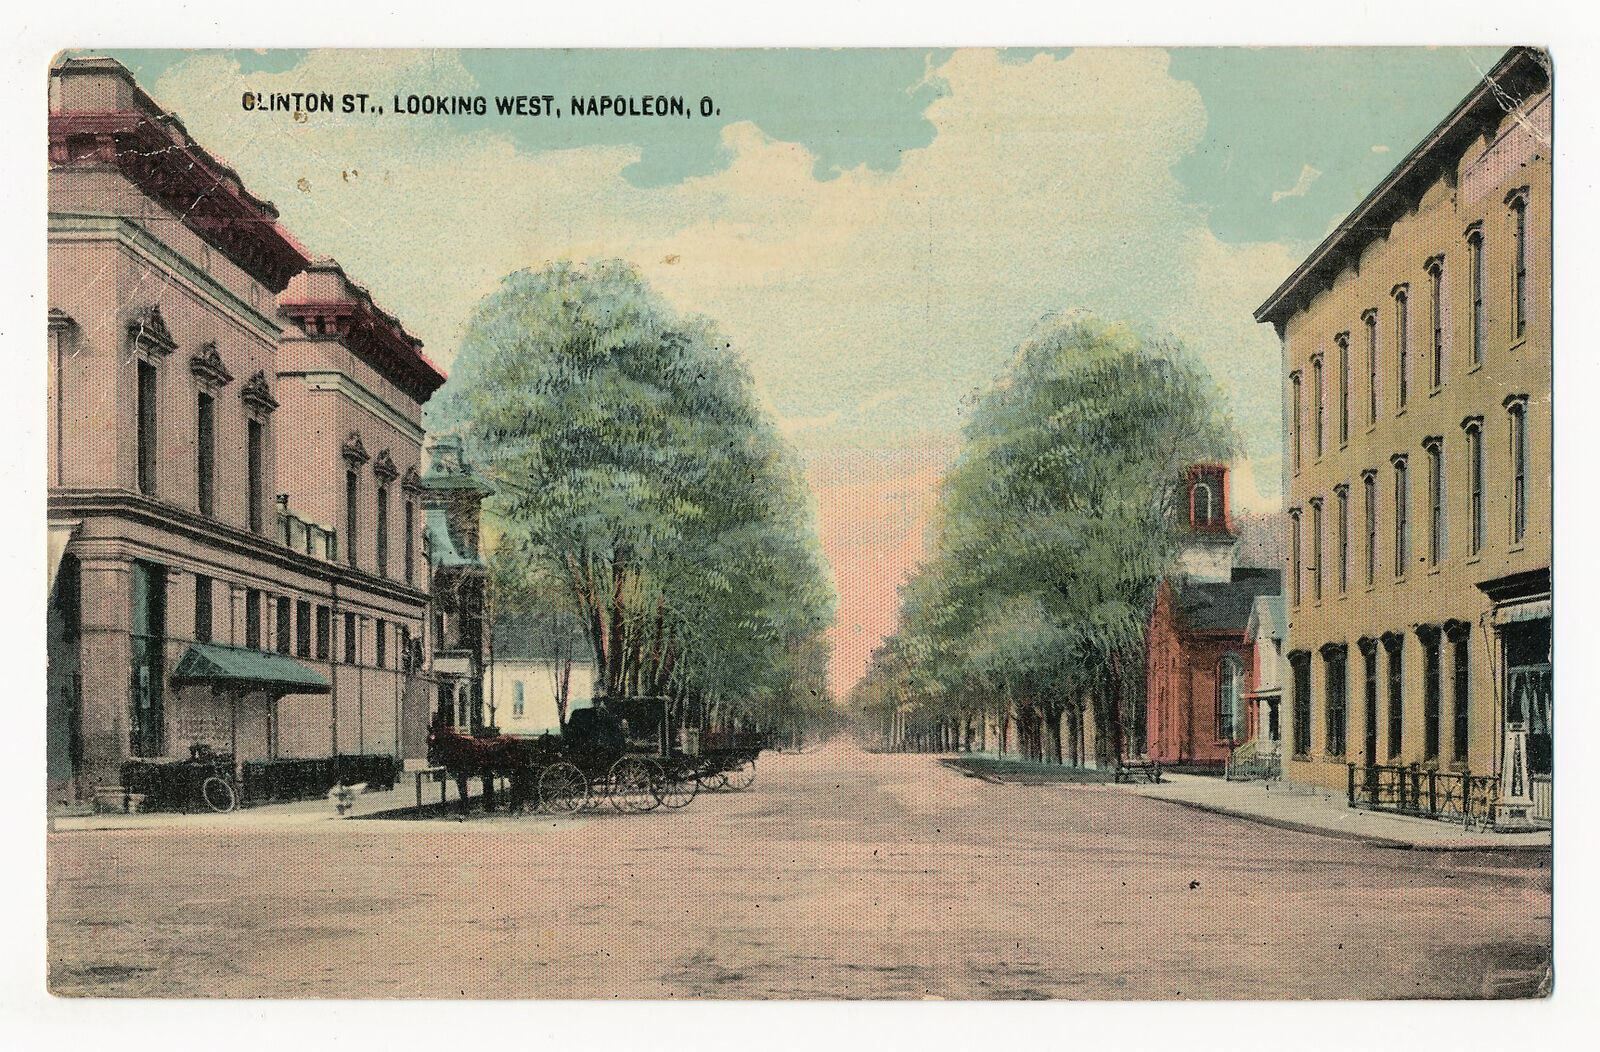 Clinton Street looking West, Napoleon, Ohio ca.1910